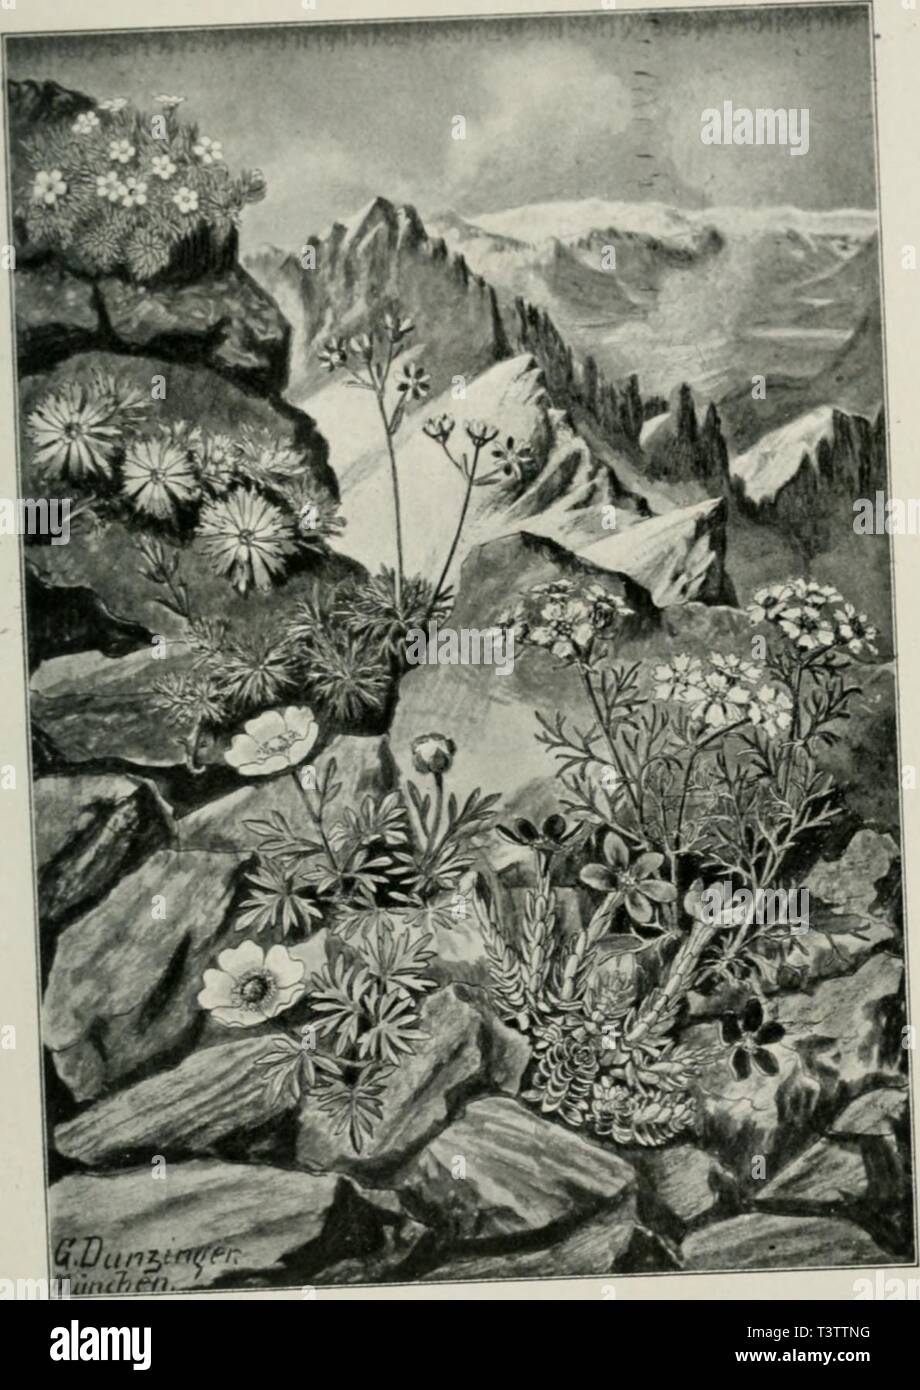 Archive image from page 58 of Die Natur in den Alpen. Die Natur in den Alpen  dienaturindenalp00franuoft Year: 1910  Die £)öd)jten Sd)neepflan3cn. Cinfs unten bte hinter bem Achi..-. Schata unb S. museoides. (Xlod, b« Hatur „».«» por Ranunculus glacialis), beneben Gentiana brachyphylla, &lt;E,stanuntel (Ranunculus g Androsace giacialis. Saxifraga mo- cniUea atrata W*. 1«*™™,«.*) Stock Photo